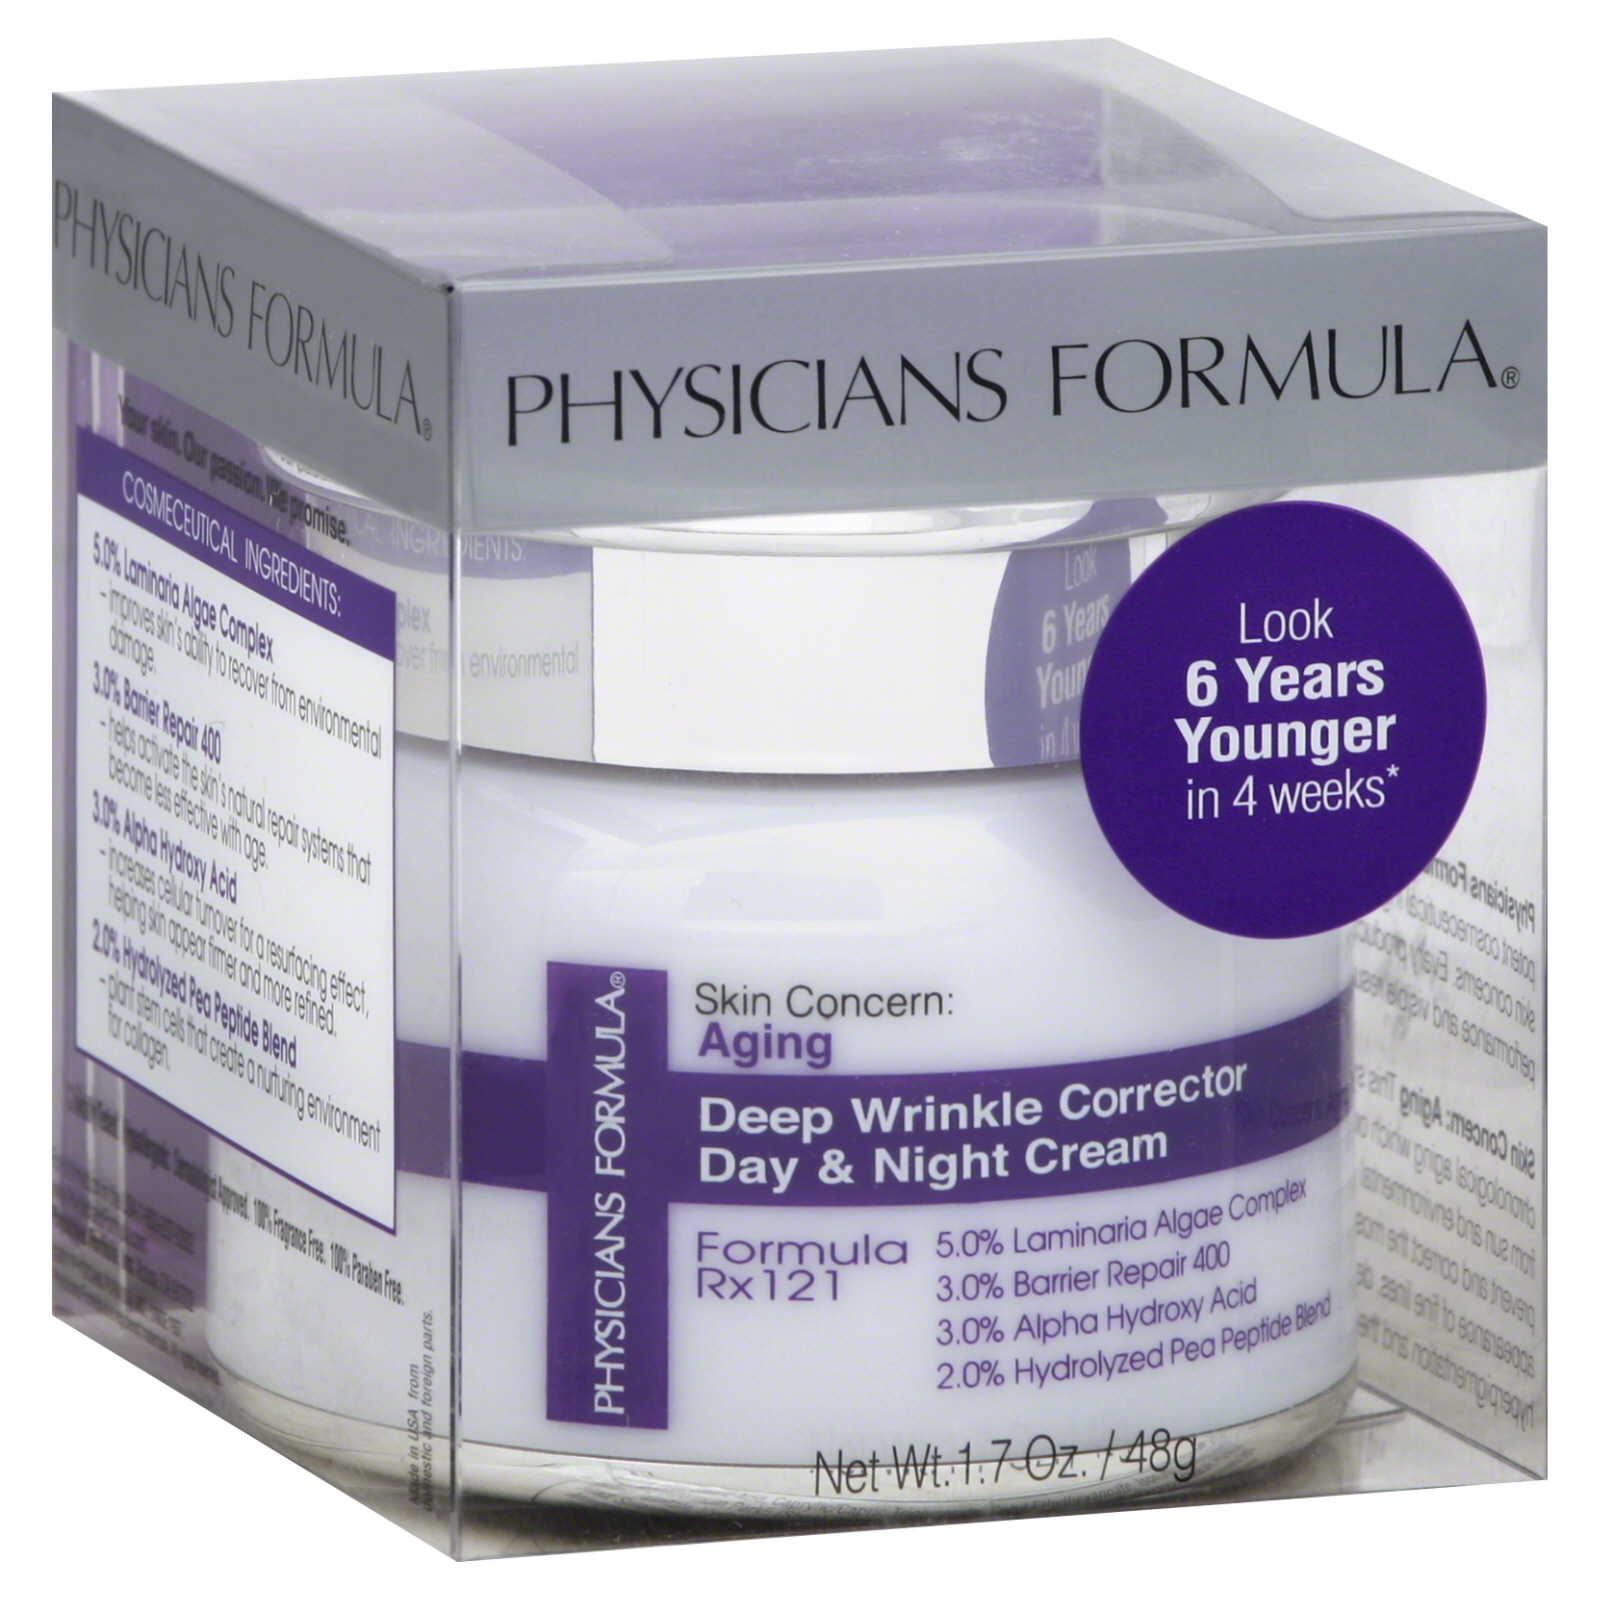 Physicians Formula Skin Concern Aging: Deep Wrinkle Corrector Day & Night Cream 1.7 oz